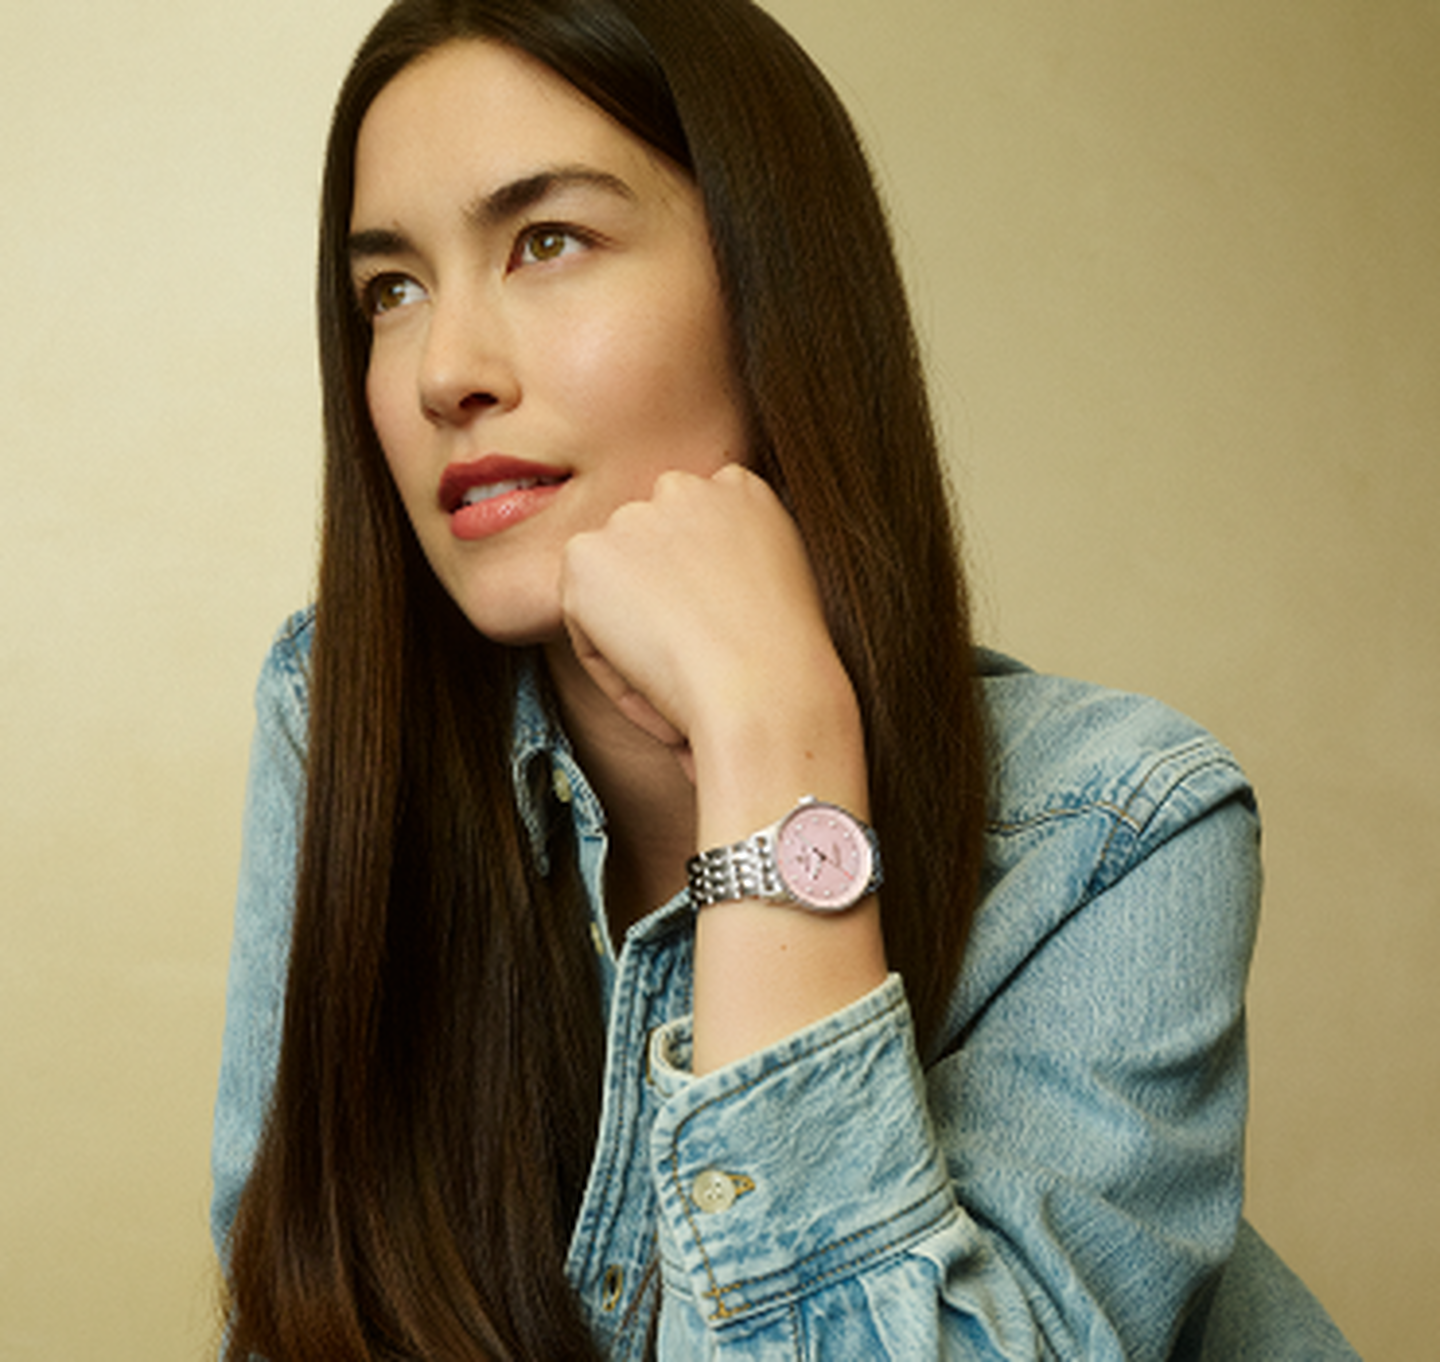 Woman wearing a Breitling Superocean watch